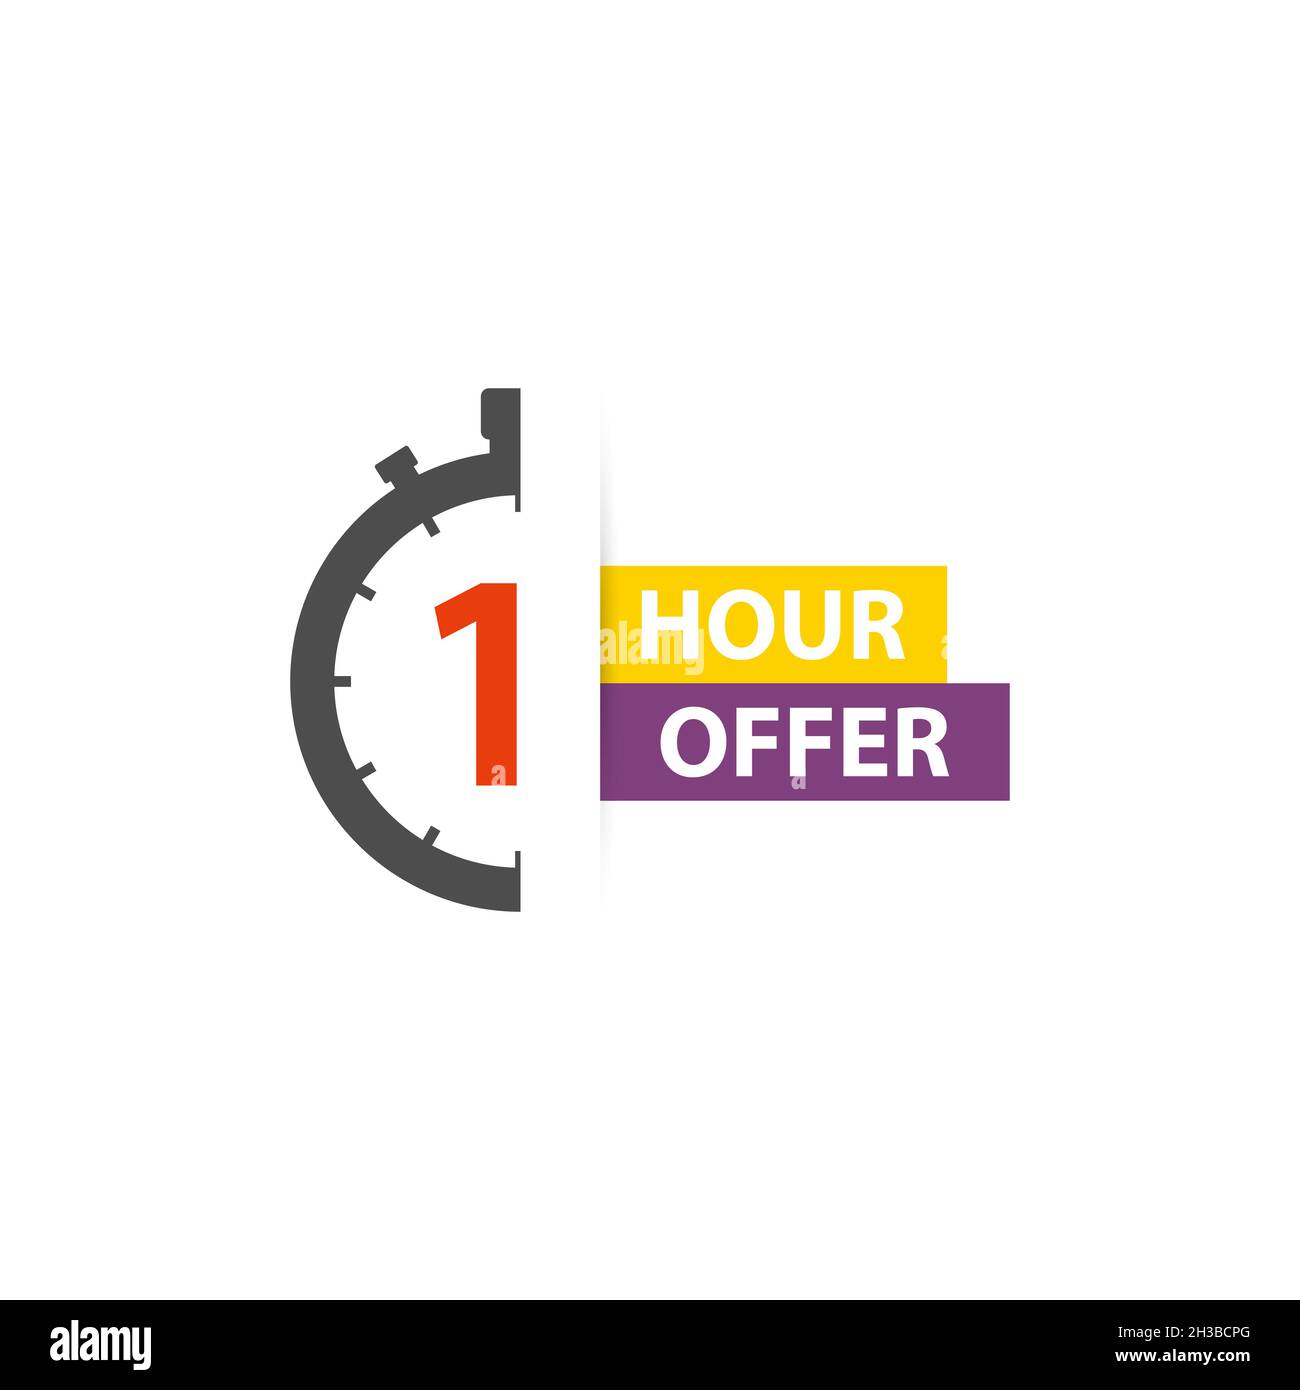 https://c8.alamy.com/comp/2H3BCPG/one-hour-offer-sale-icon-stopwatch-timer-2H3BCPG.jpg